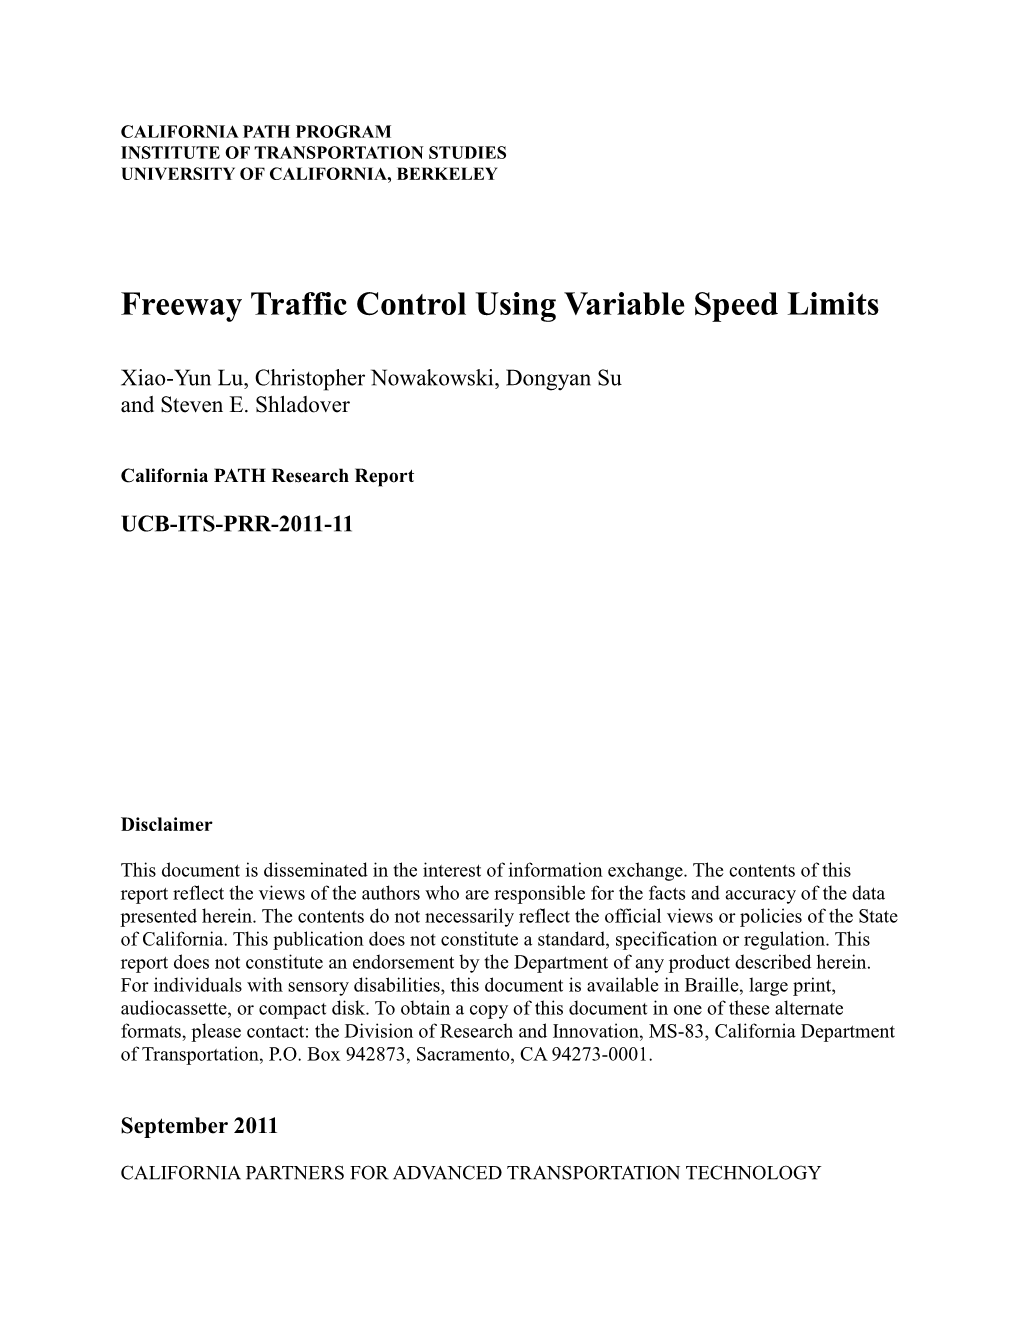 Final Report on Freeway Traffic Control